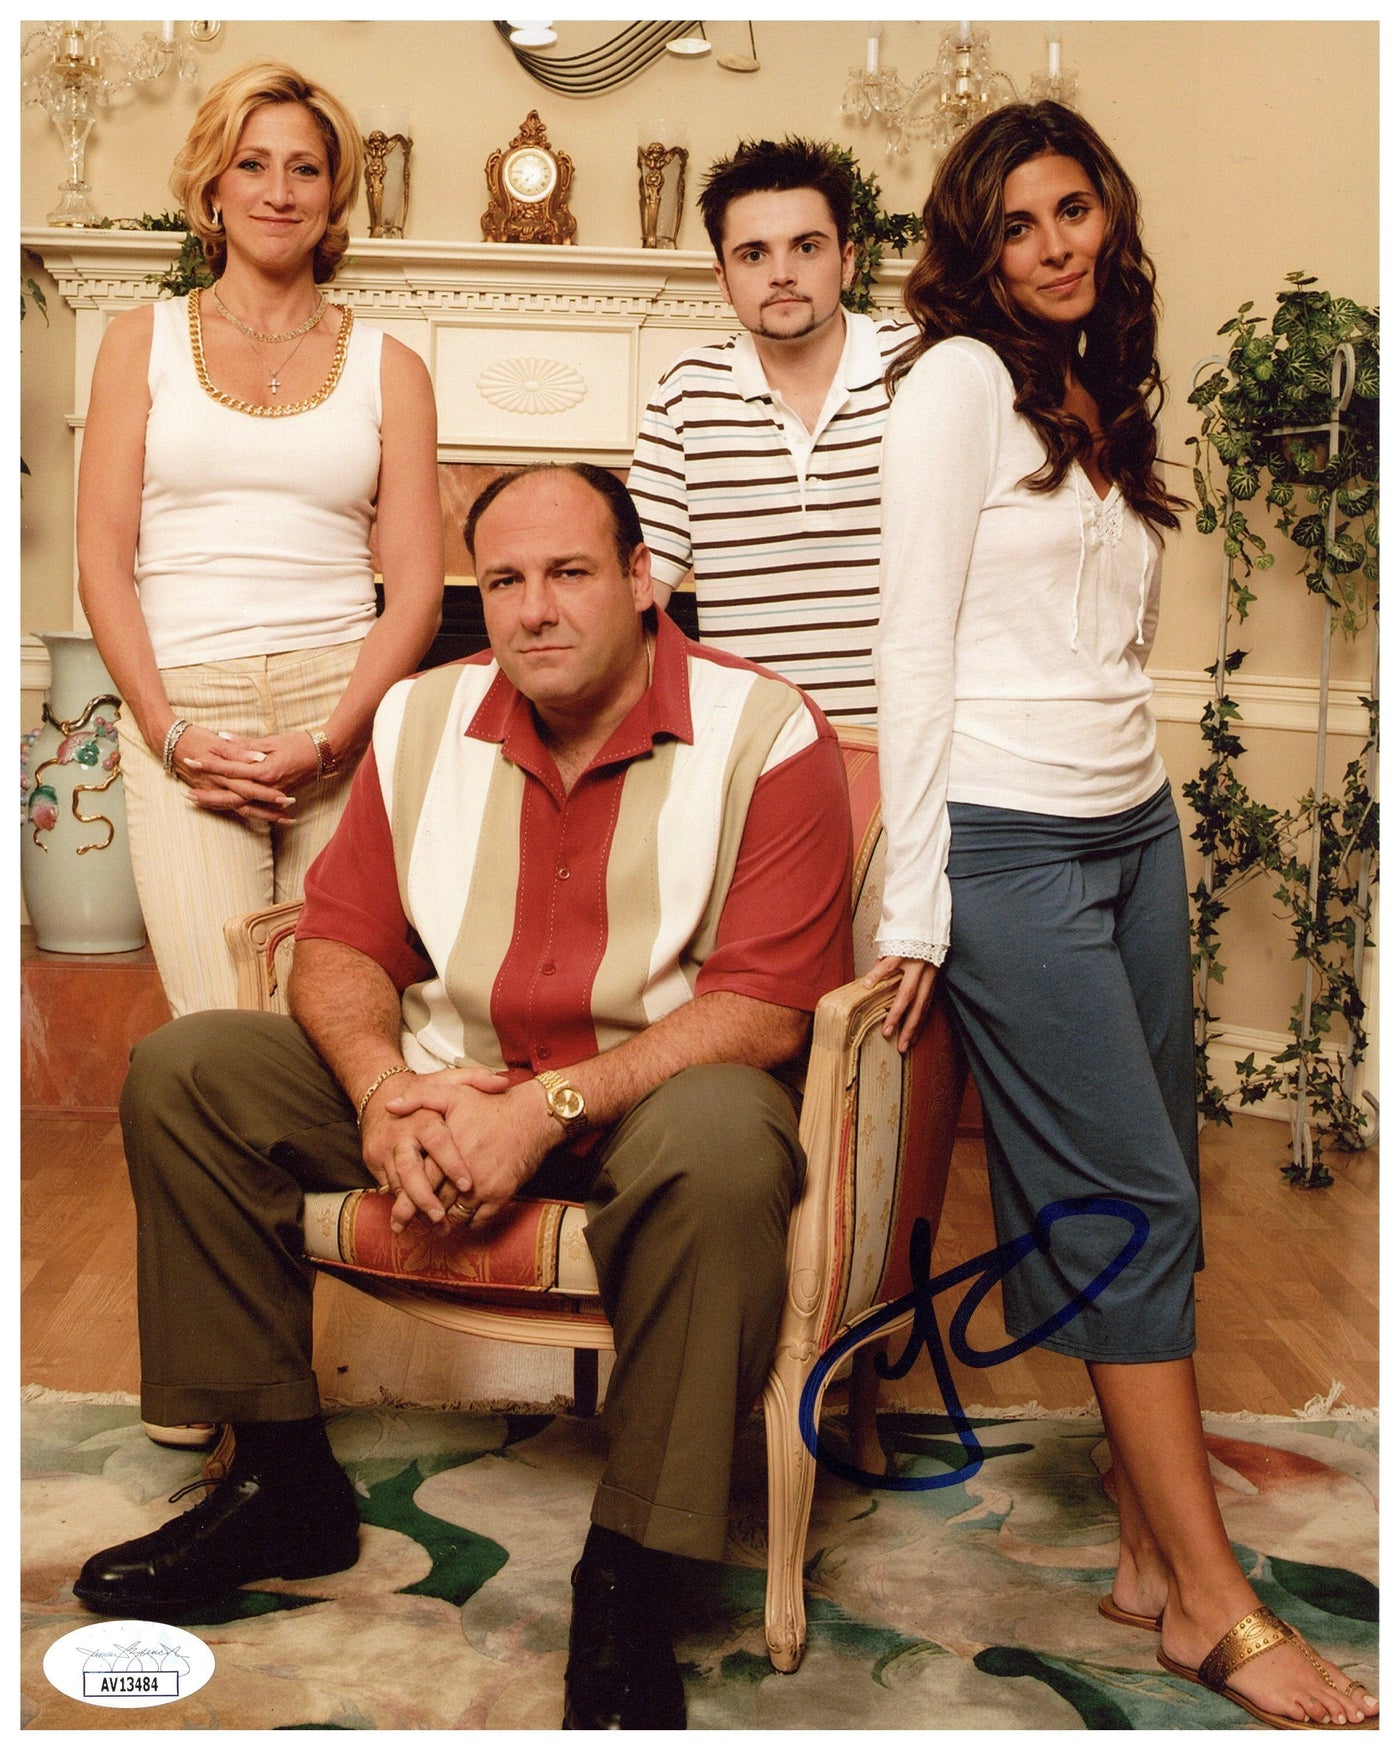 Jamie Lynn Sigler Signed 8x10 Photo The Sopranos Autographed JSA COA